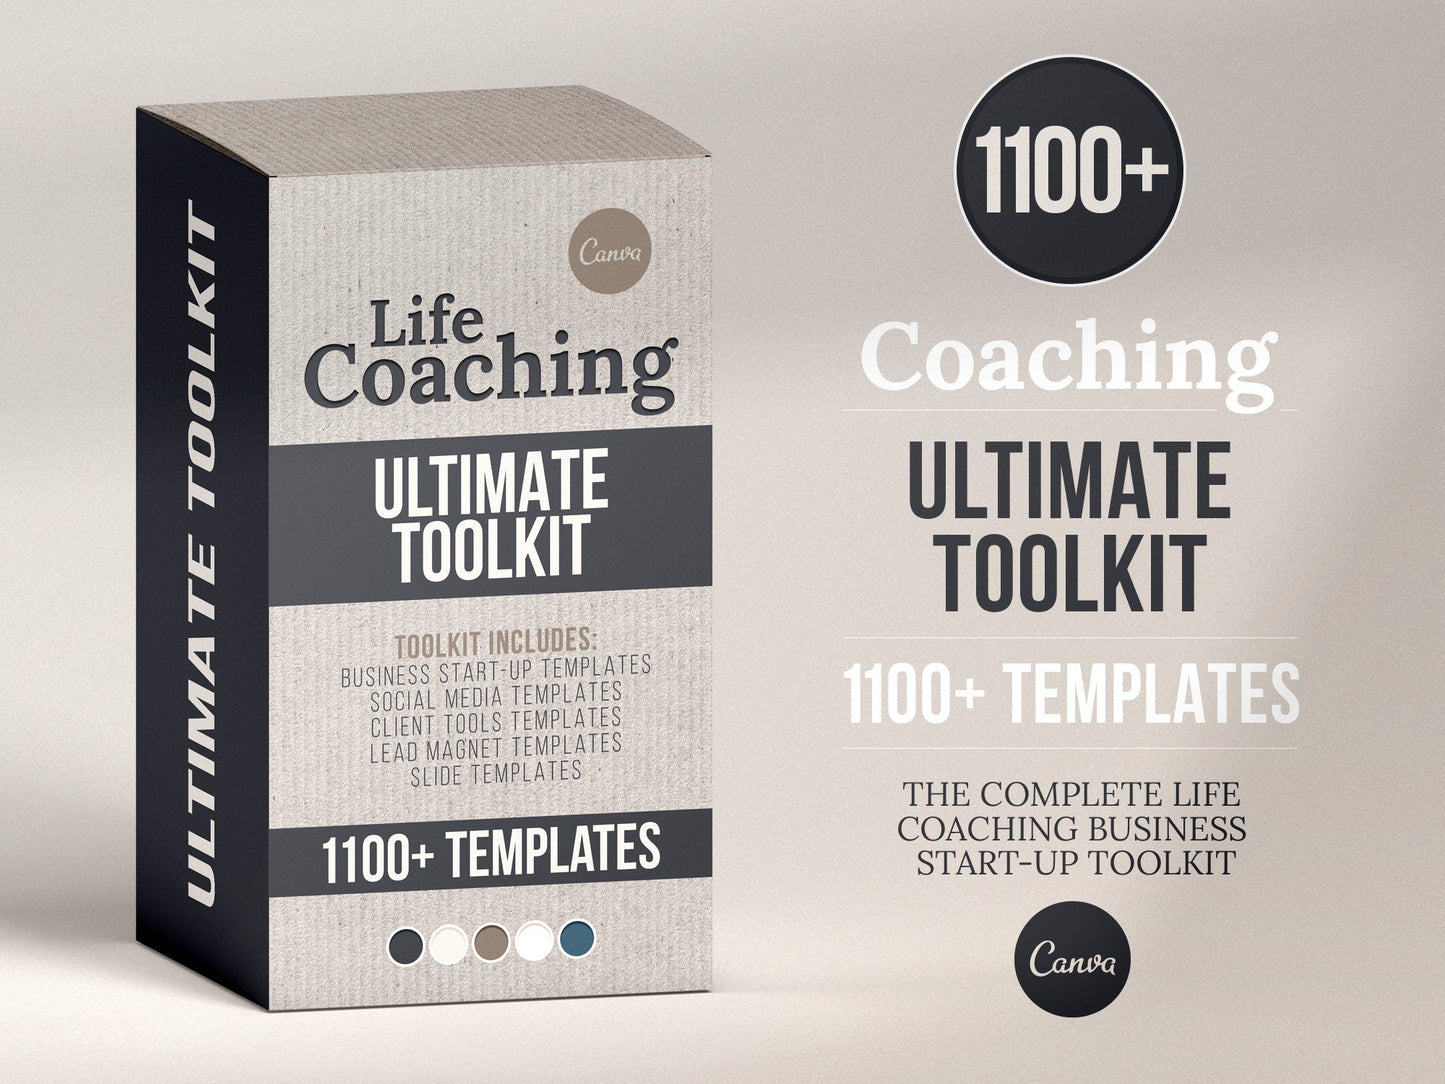 Life Coaching Ultimate Toolkit (royal)